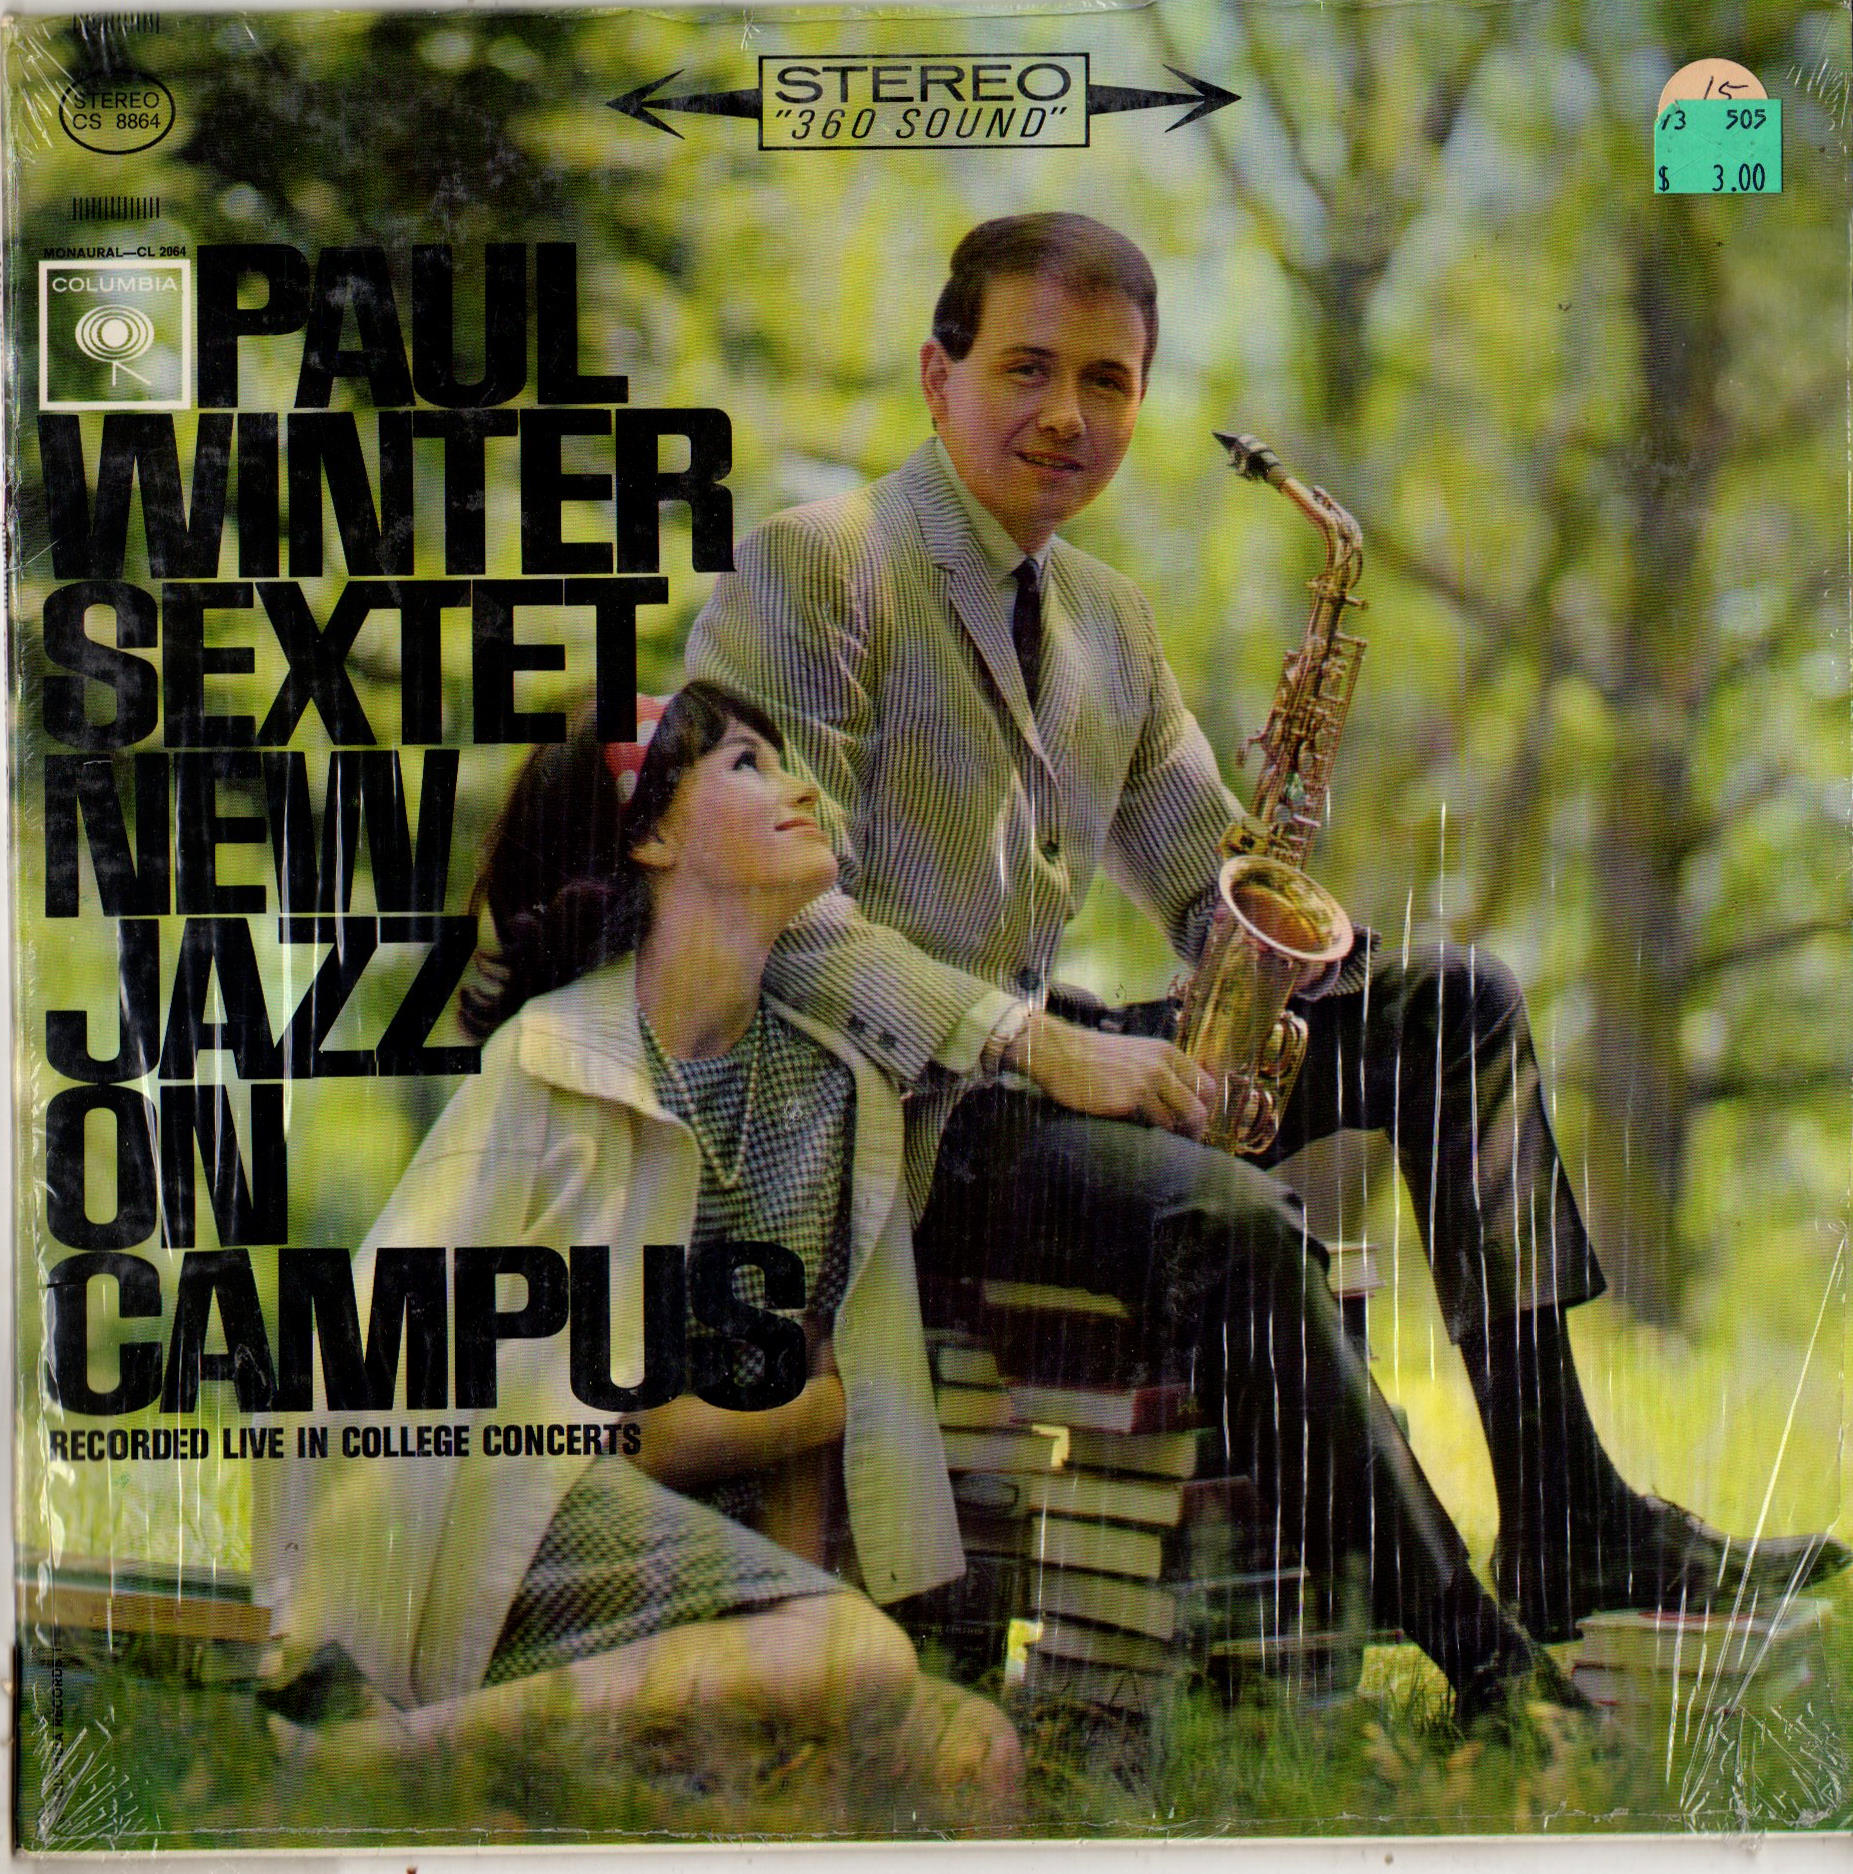 Paul Winter Sextet New Jazz On Campus Columbia albumb